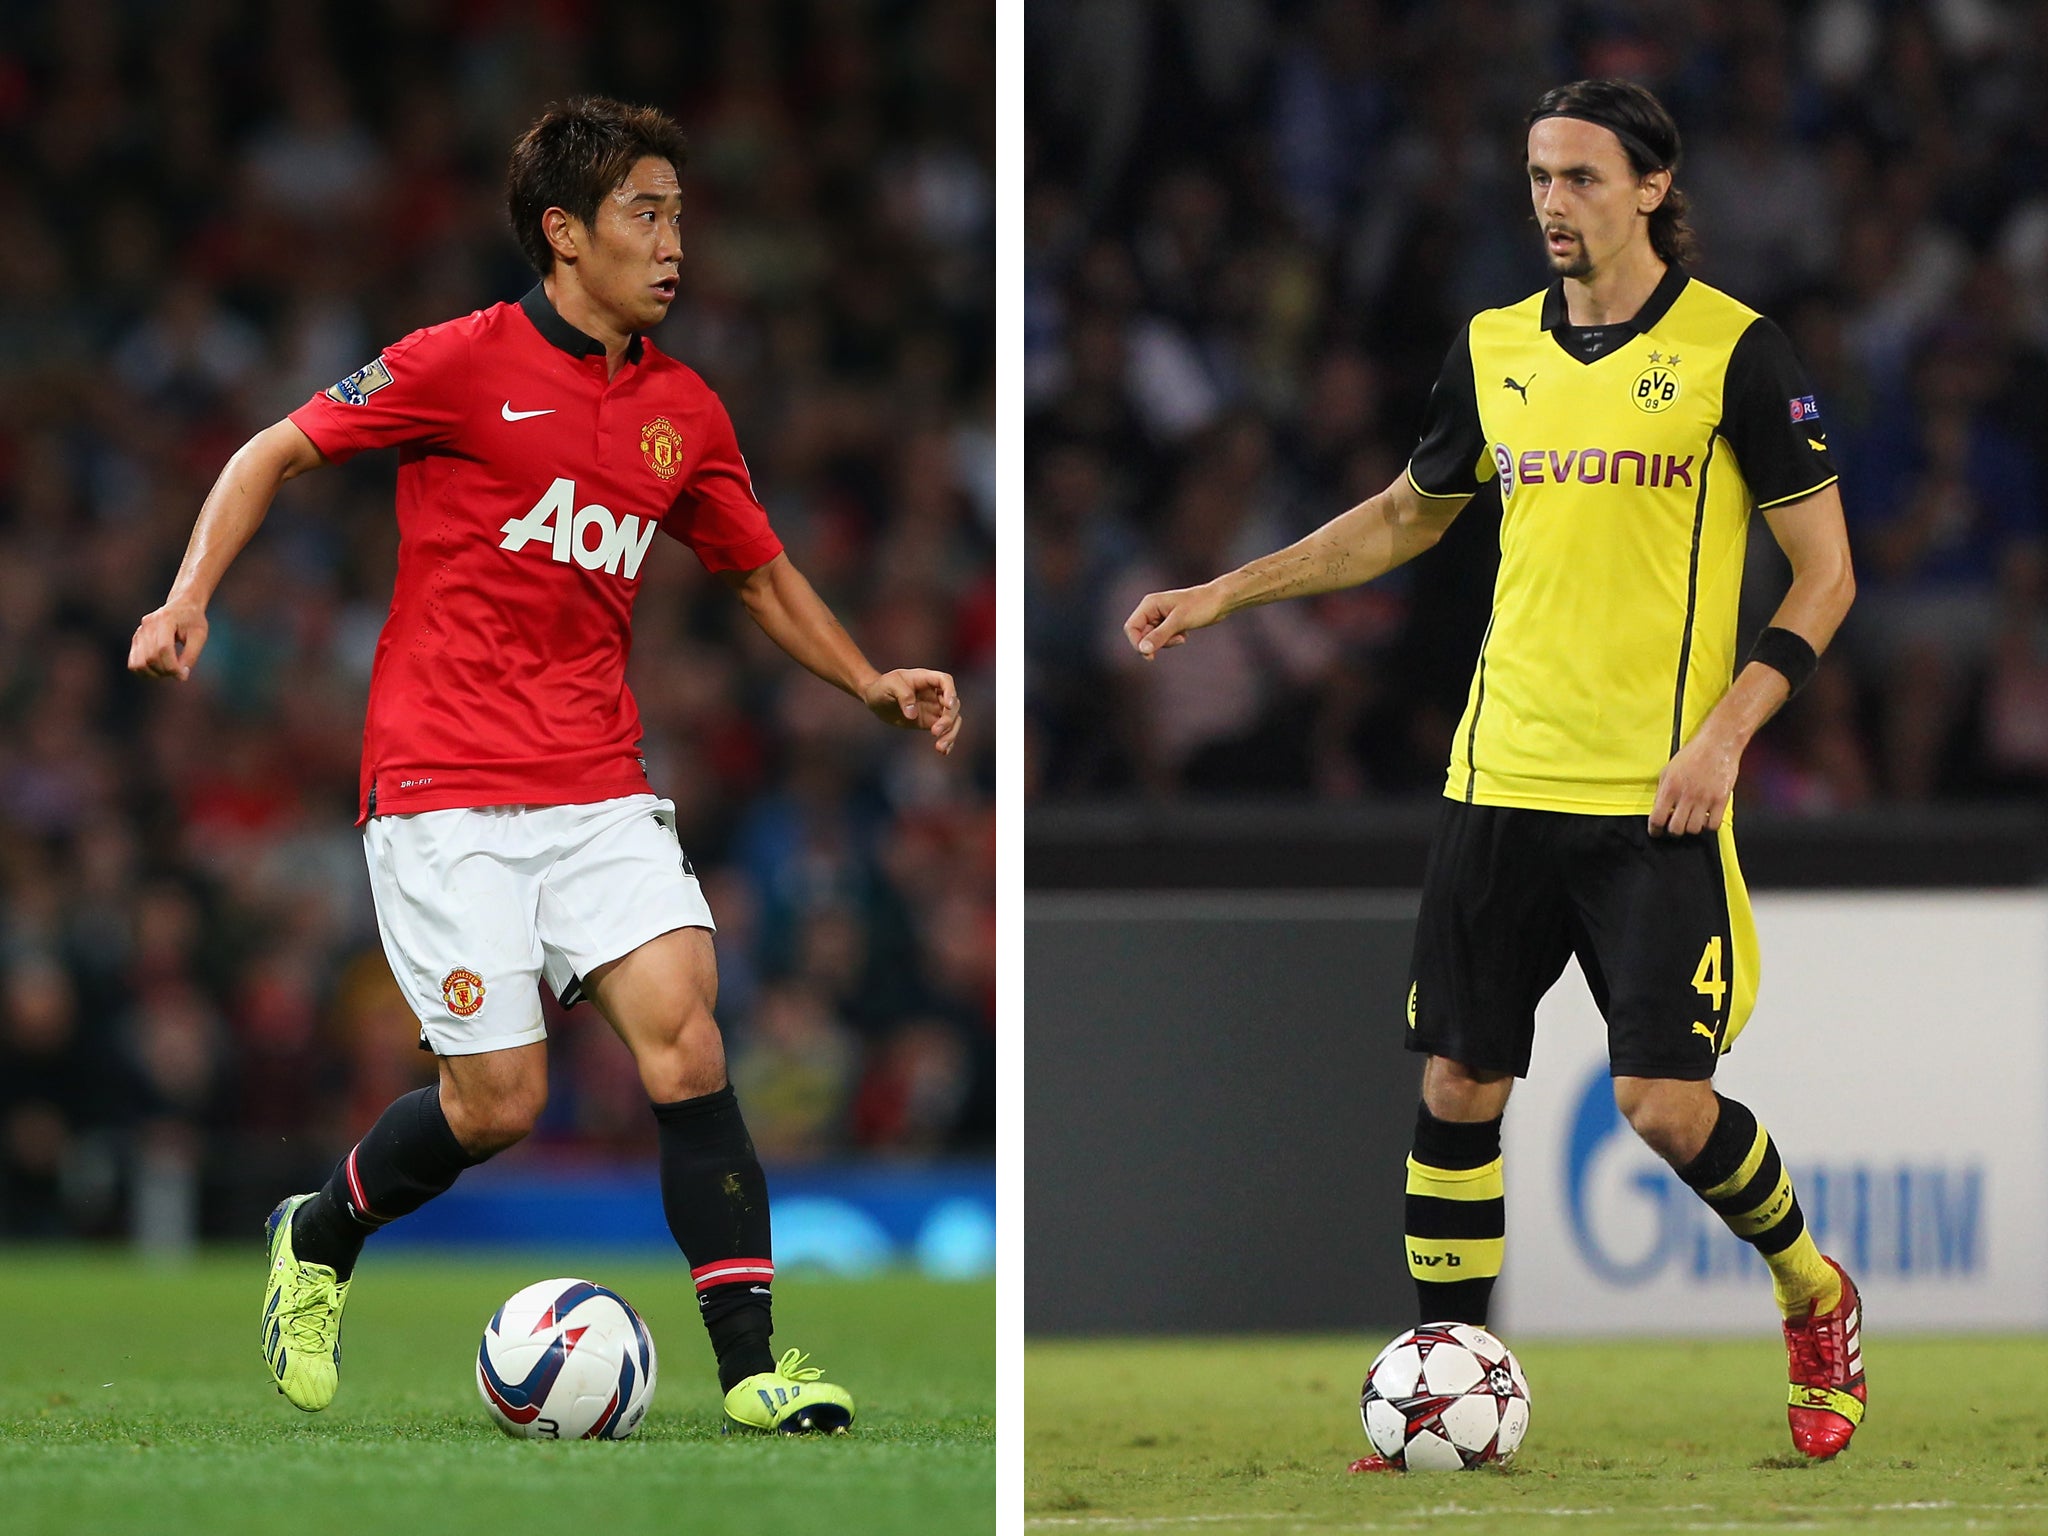 Shinji Kagawa could return to Borussia Dortmund in a swap deal for Neven Subotic